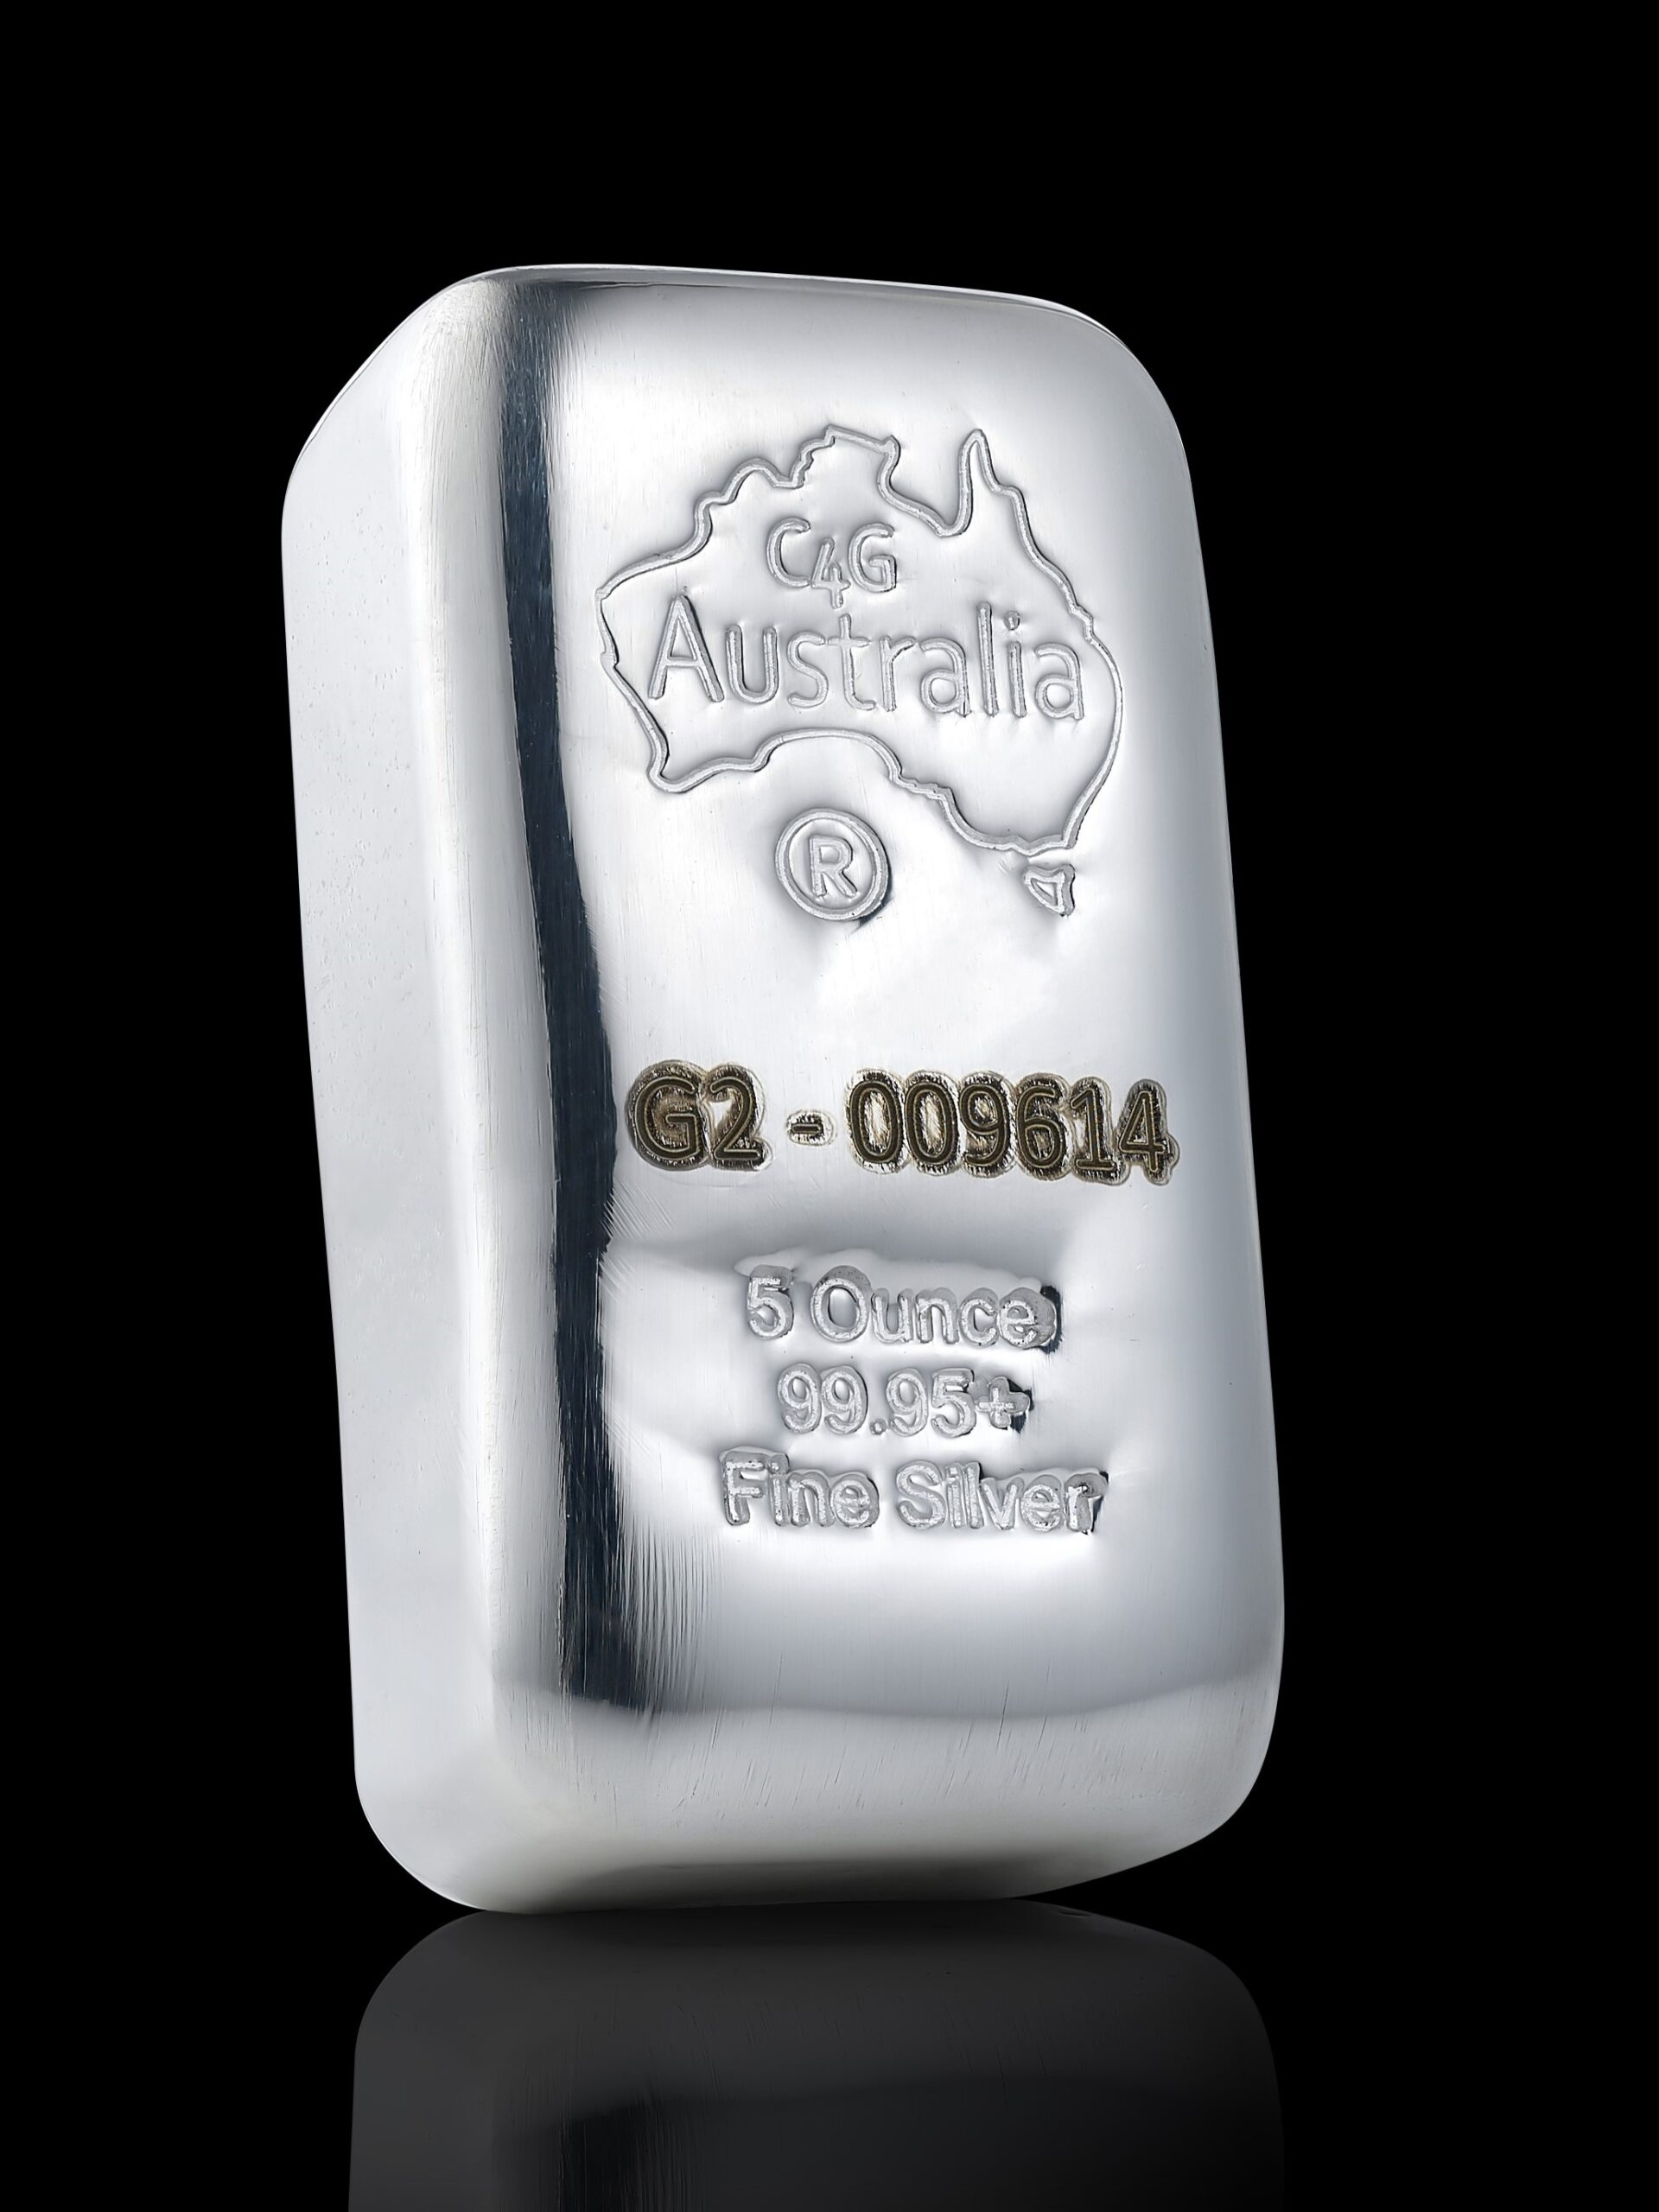 5 oz C4G Cast Silver Bullion 99.95% Pure